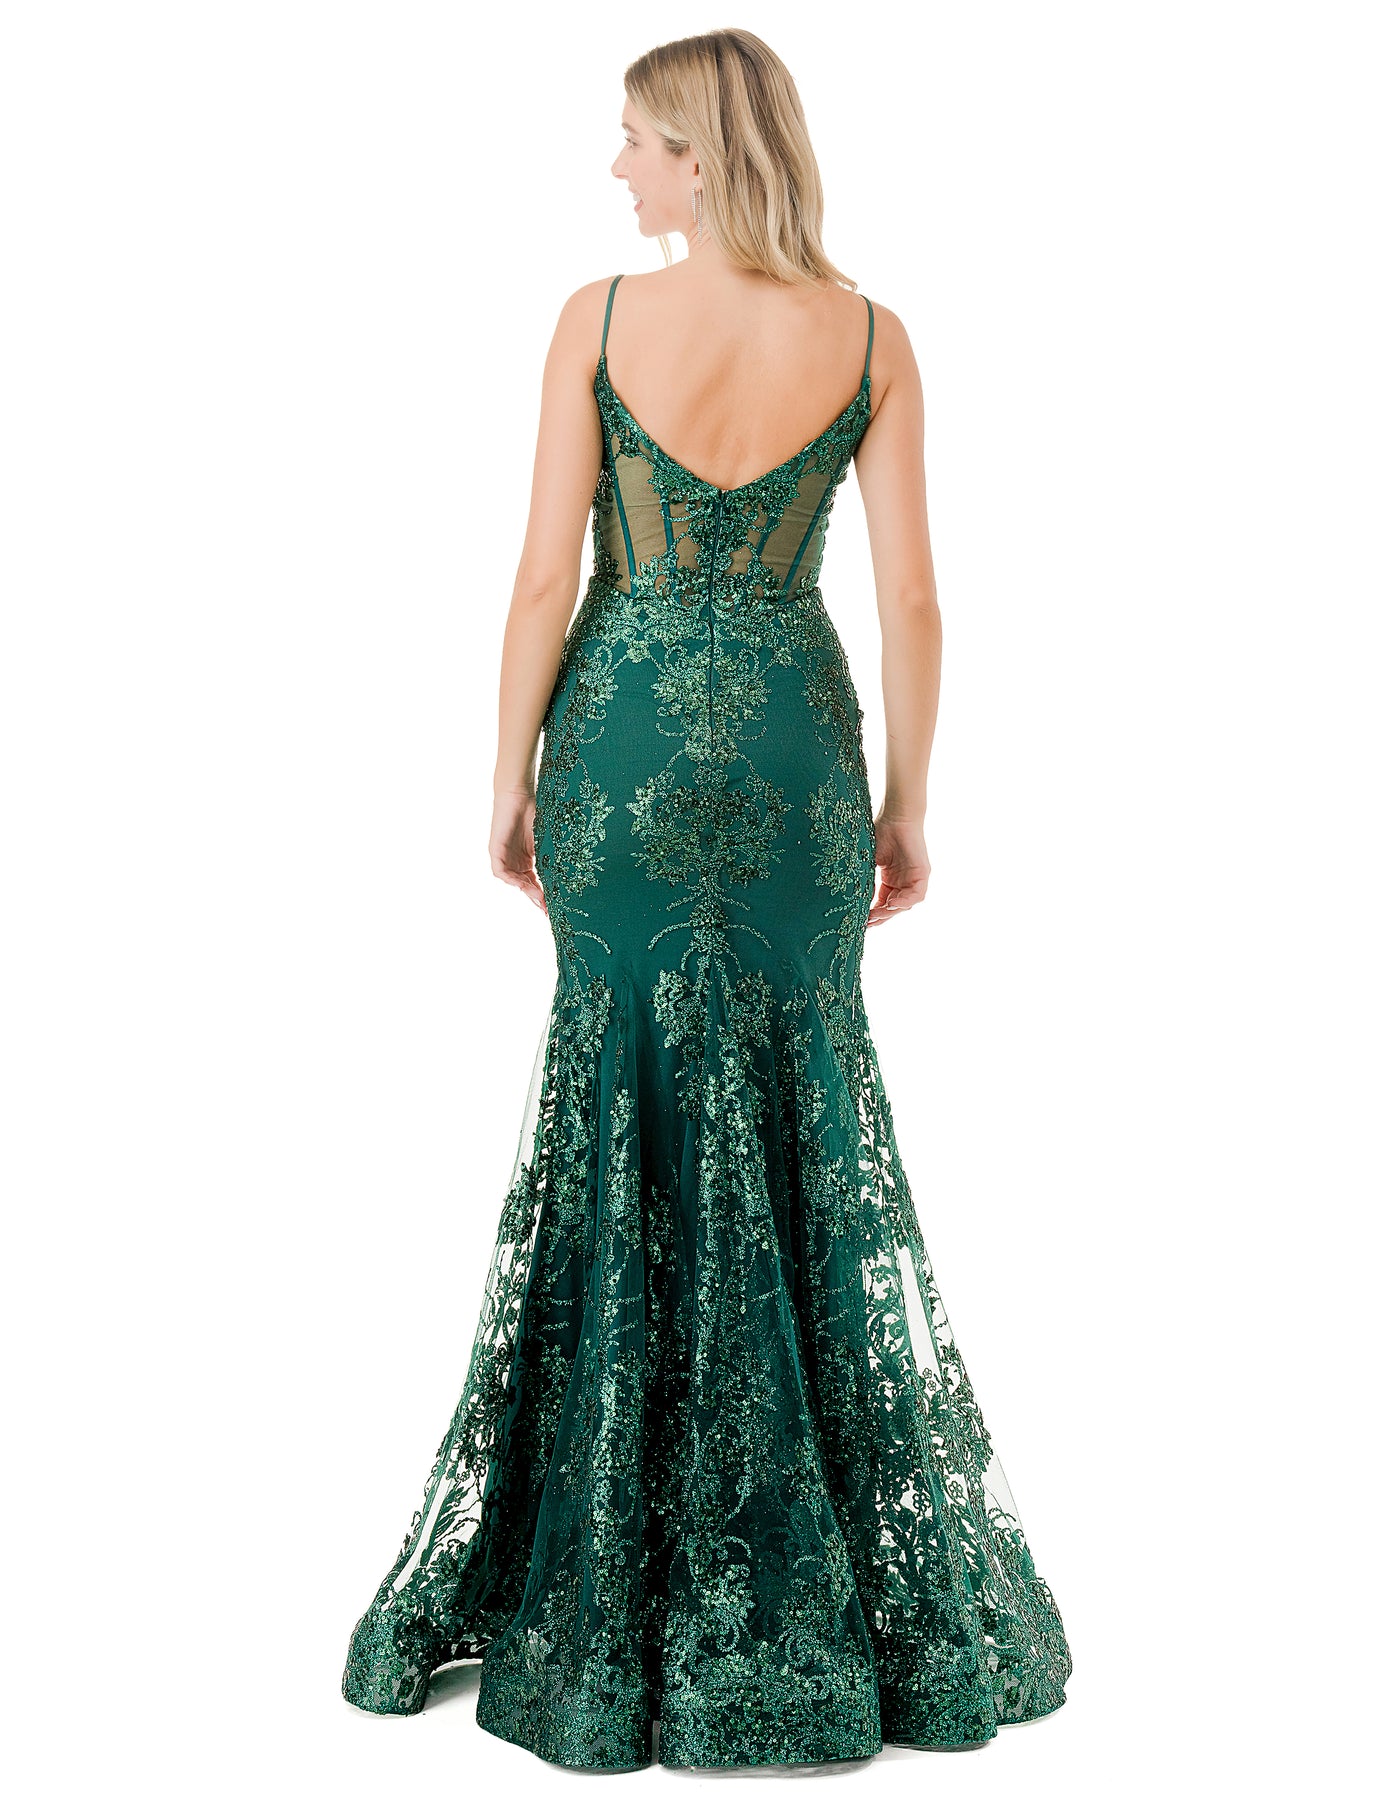 Aspeed Design L2820W - Mermaid Evening Gown